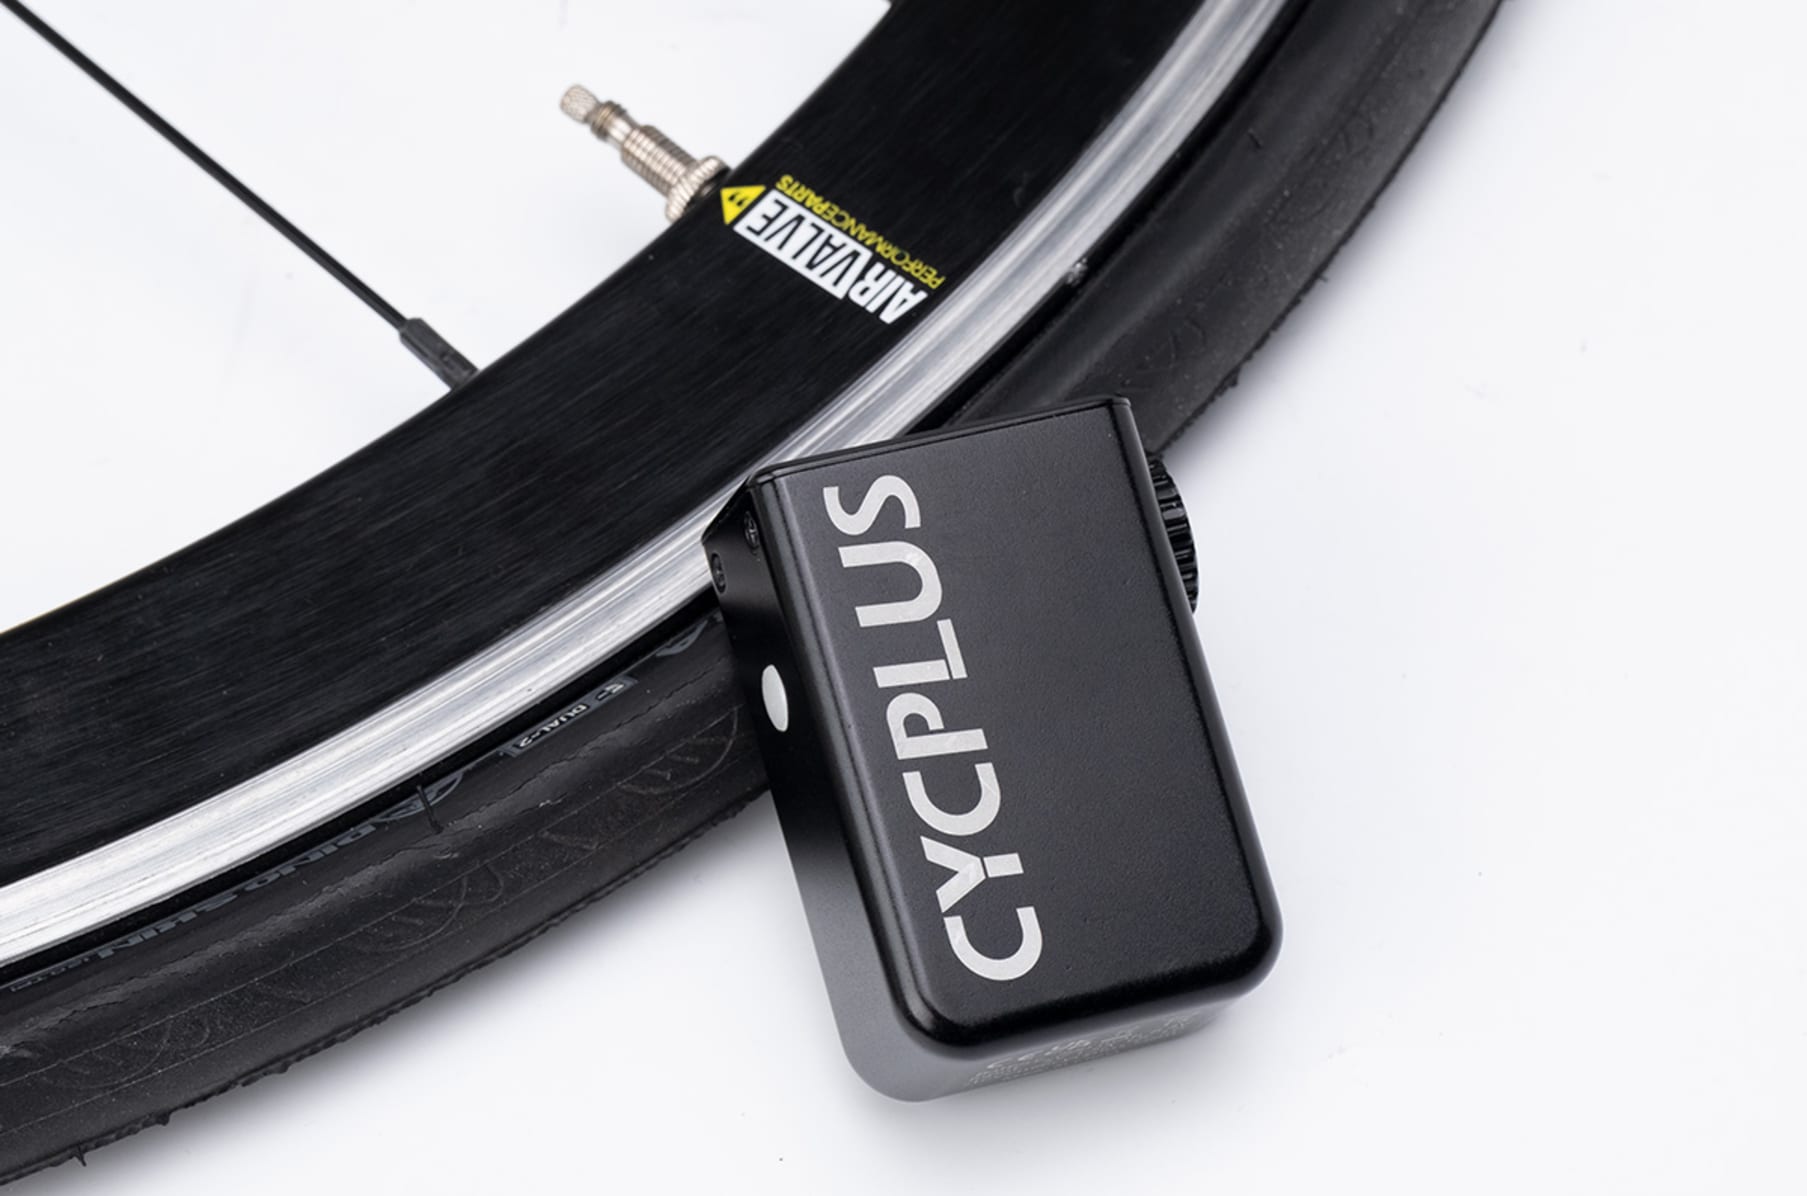 Cycplus presenta la minipompa elettrica Cube - Tech Cycling